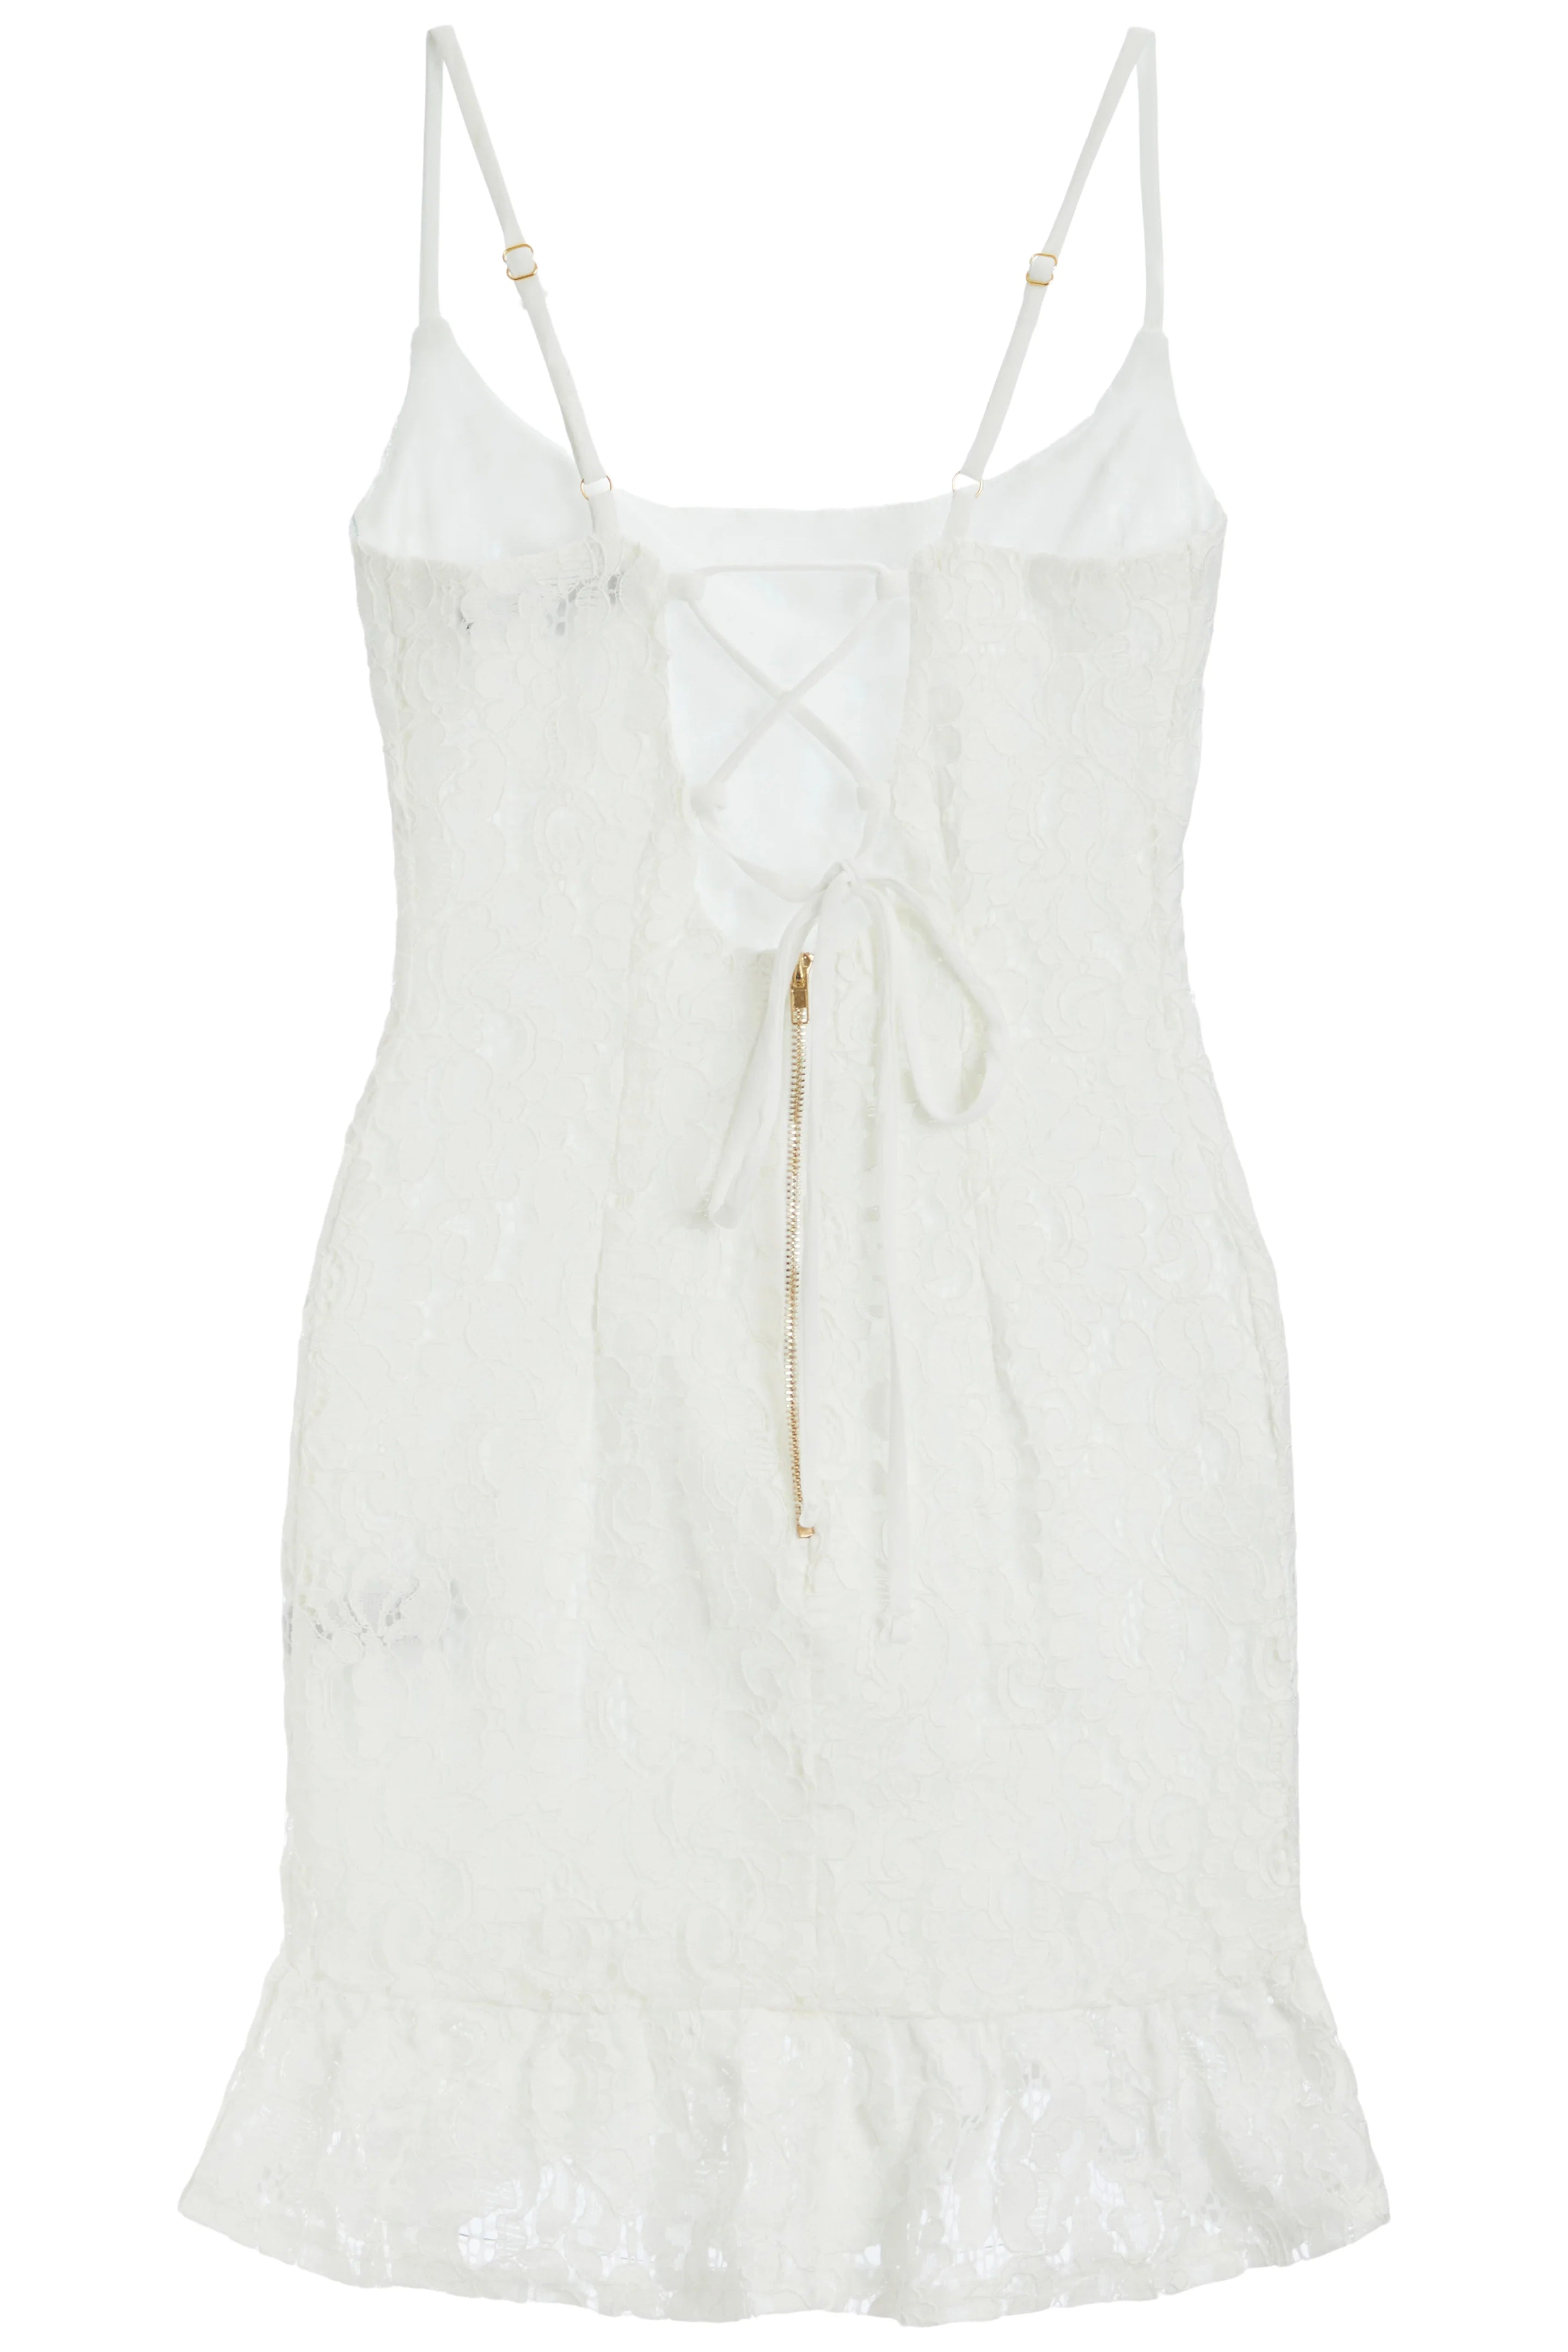 MISS BEHAVE PEYTON DRESS - WHITE